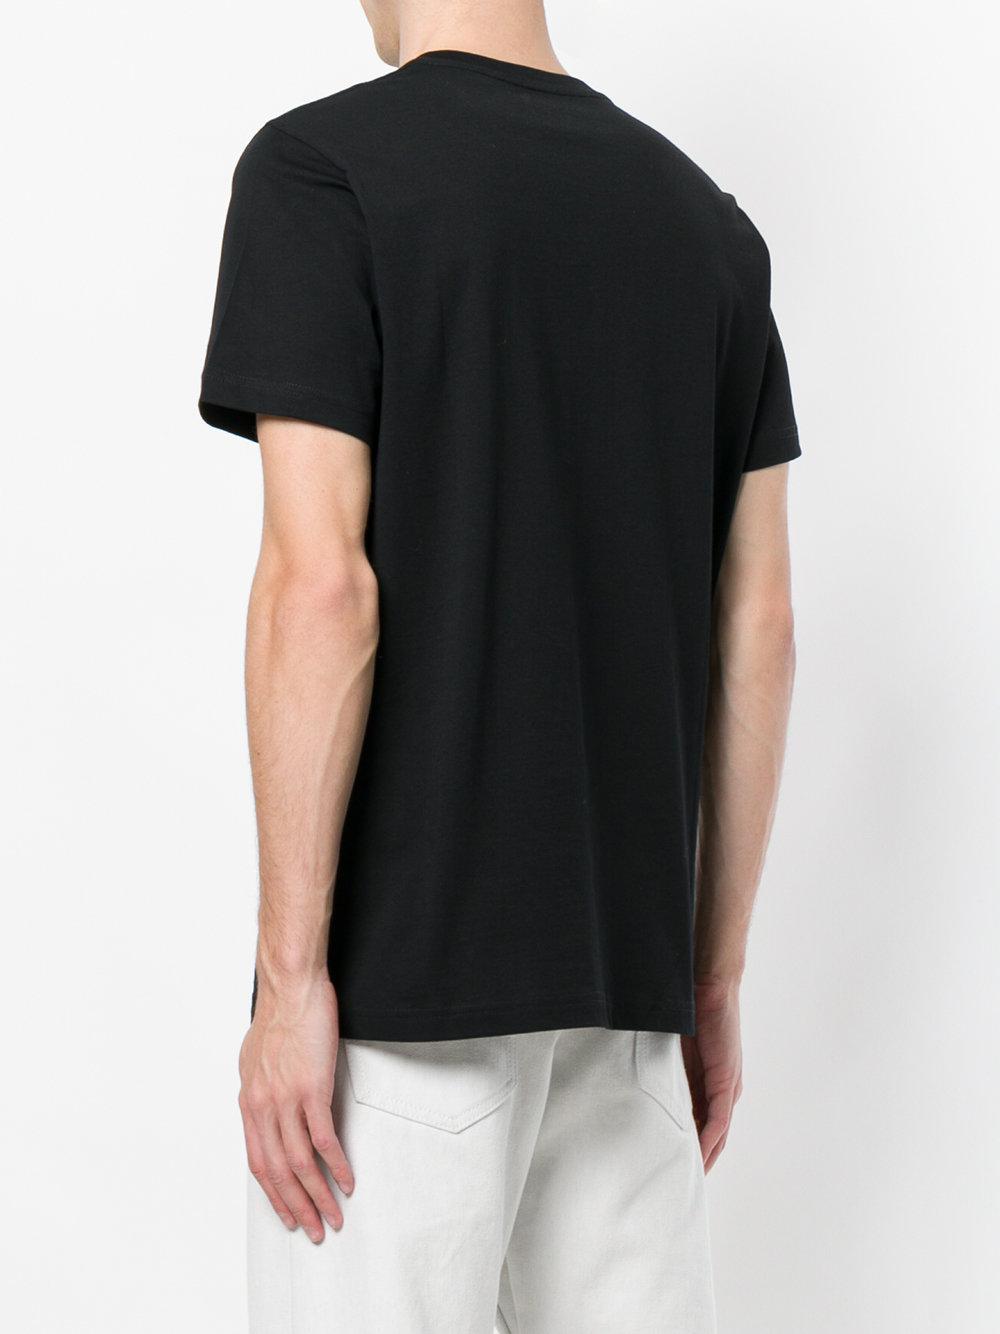 Lyst - Diesel Scorpion Print T-shirt in Black for Men